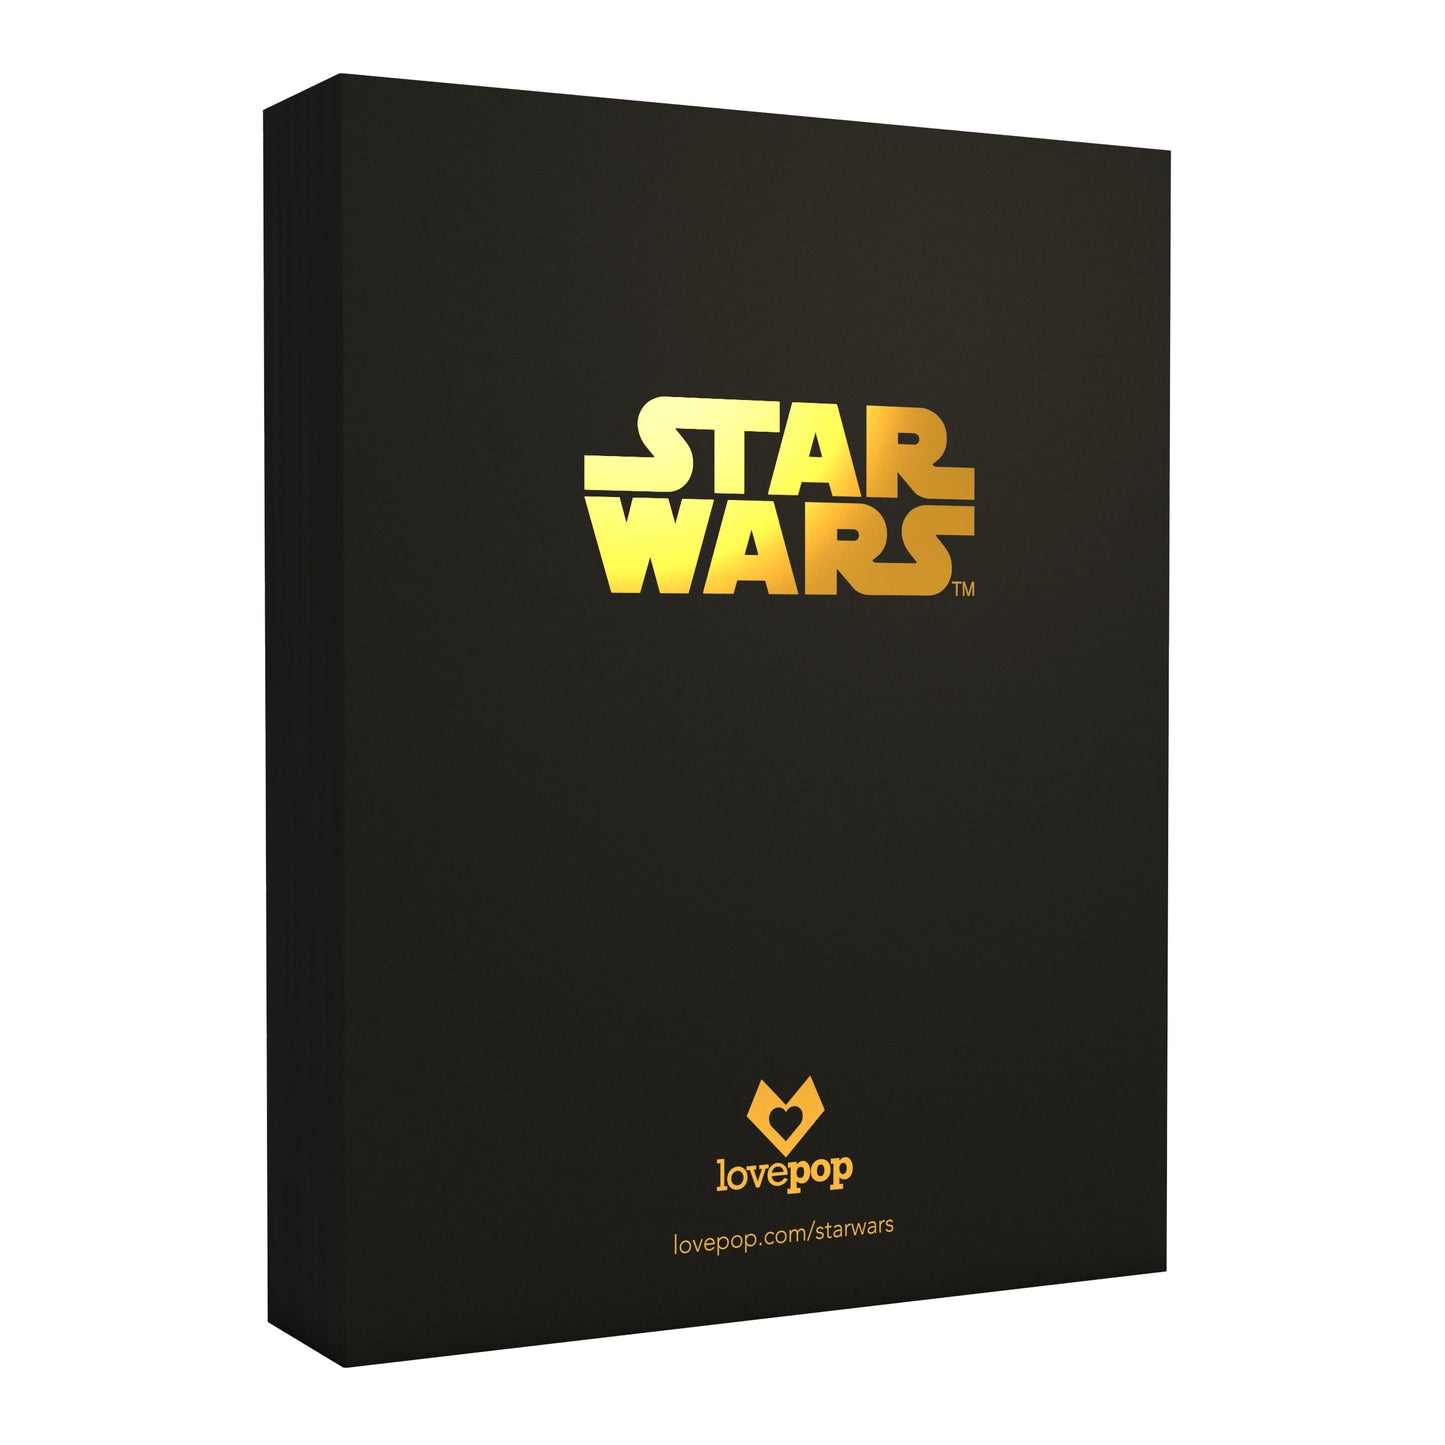 Star Wars™ SERIES II Collector's Box